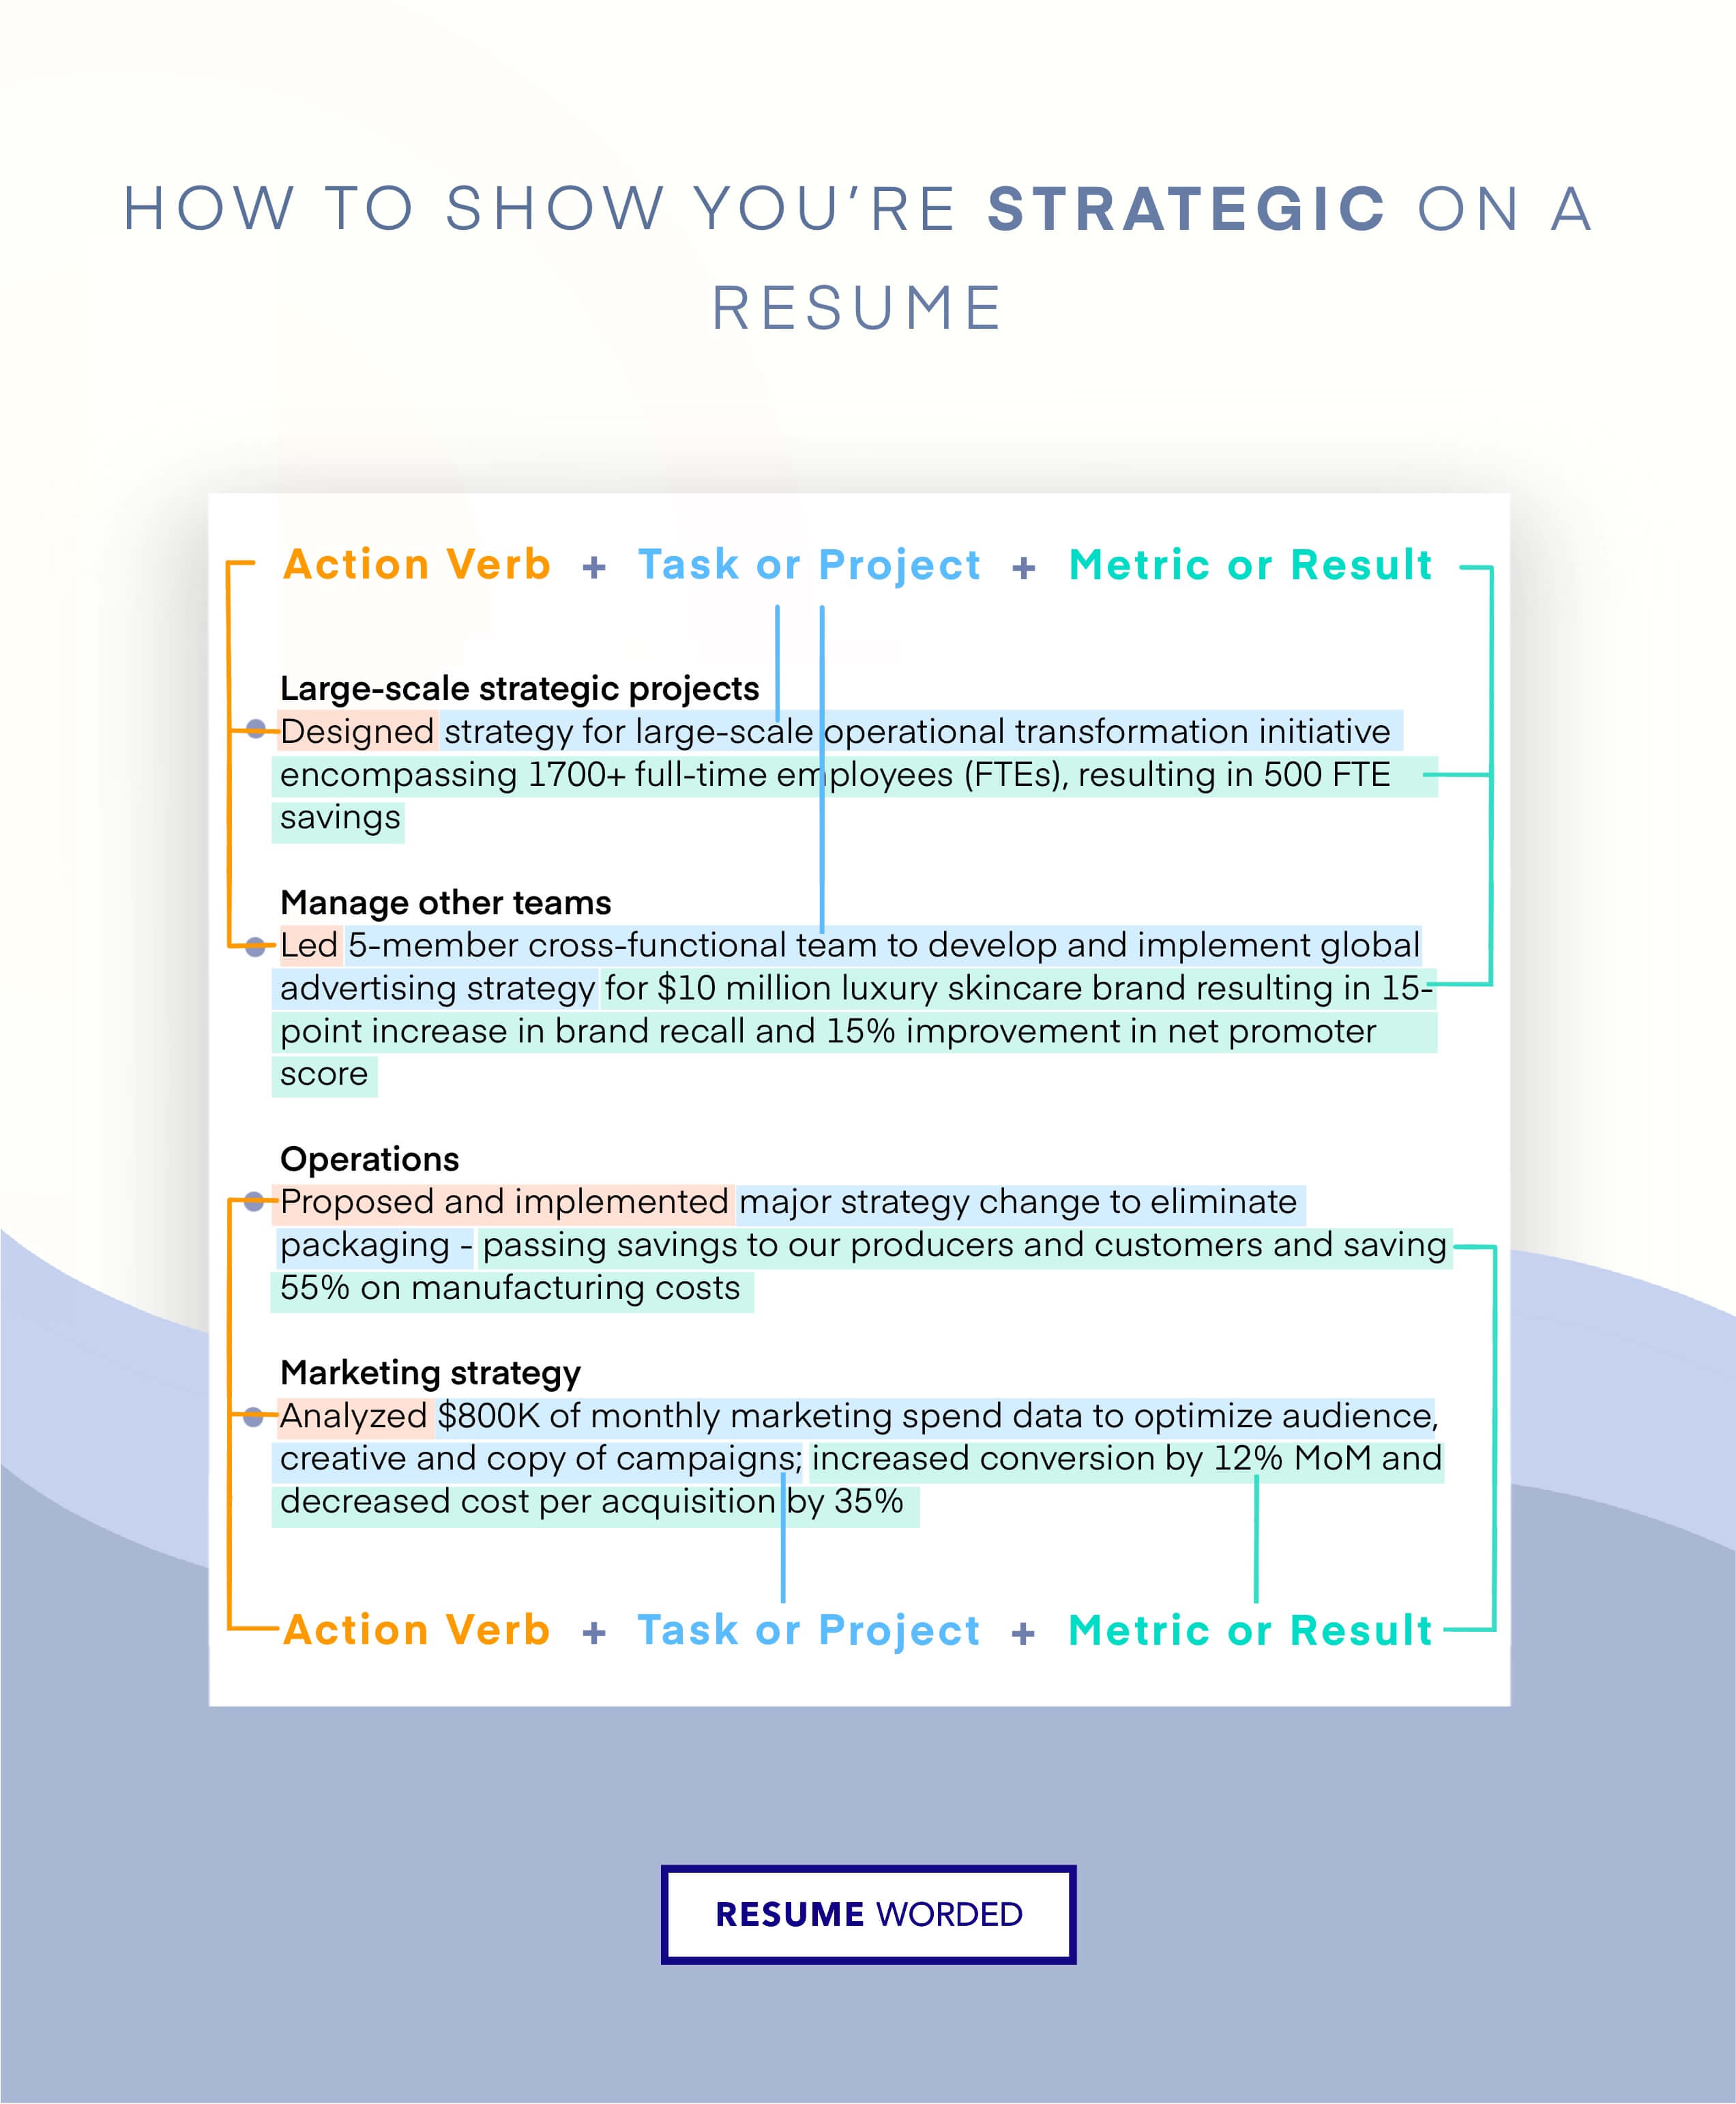 Showcase your strategic planning capabilities - Vice President of Marketing (VP, Marketing) CV